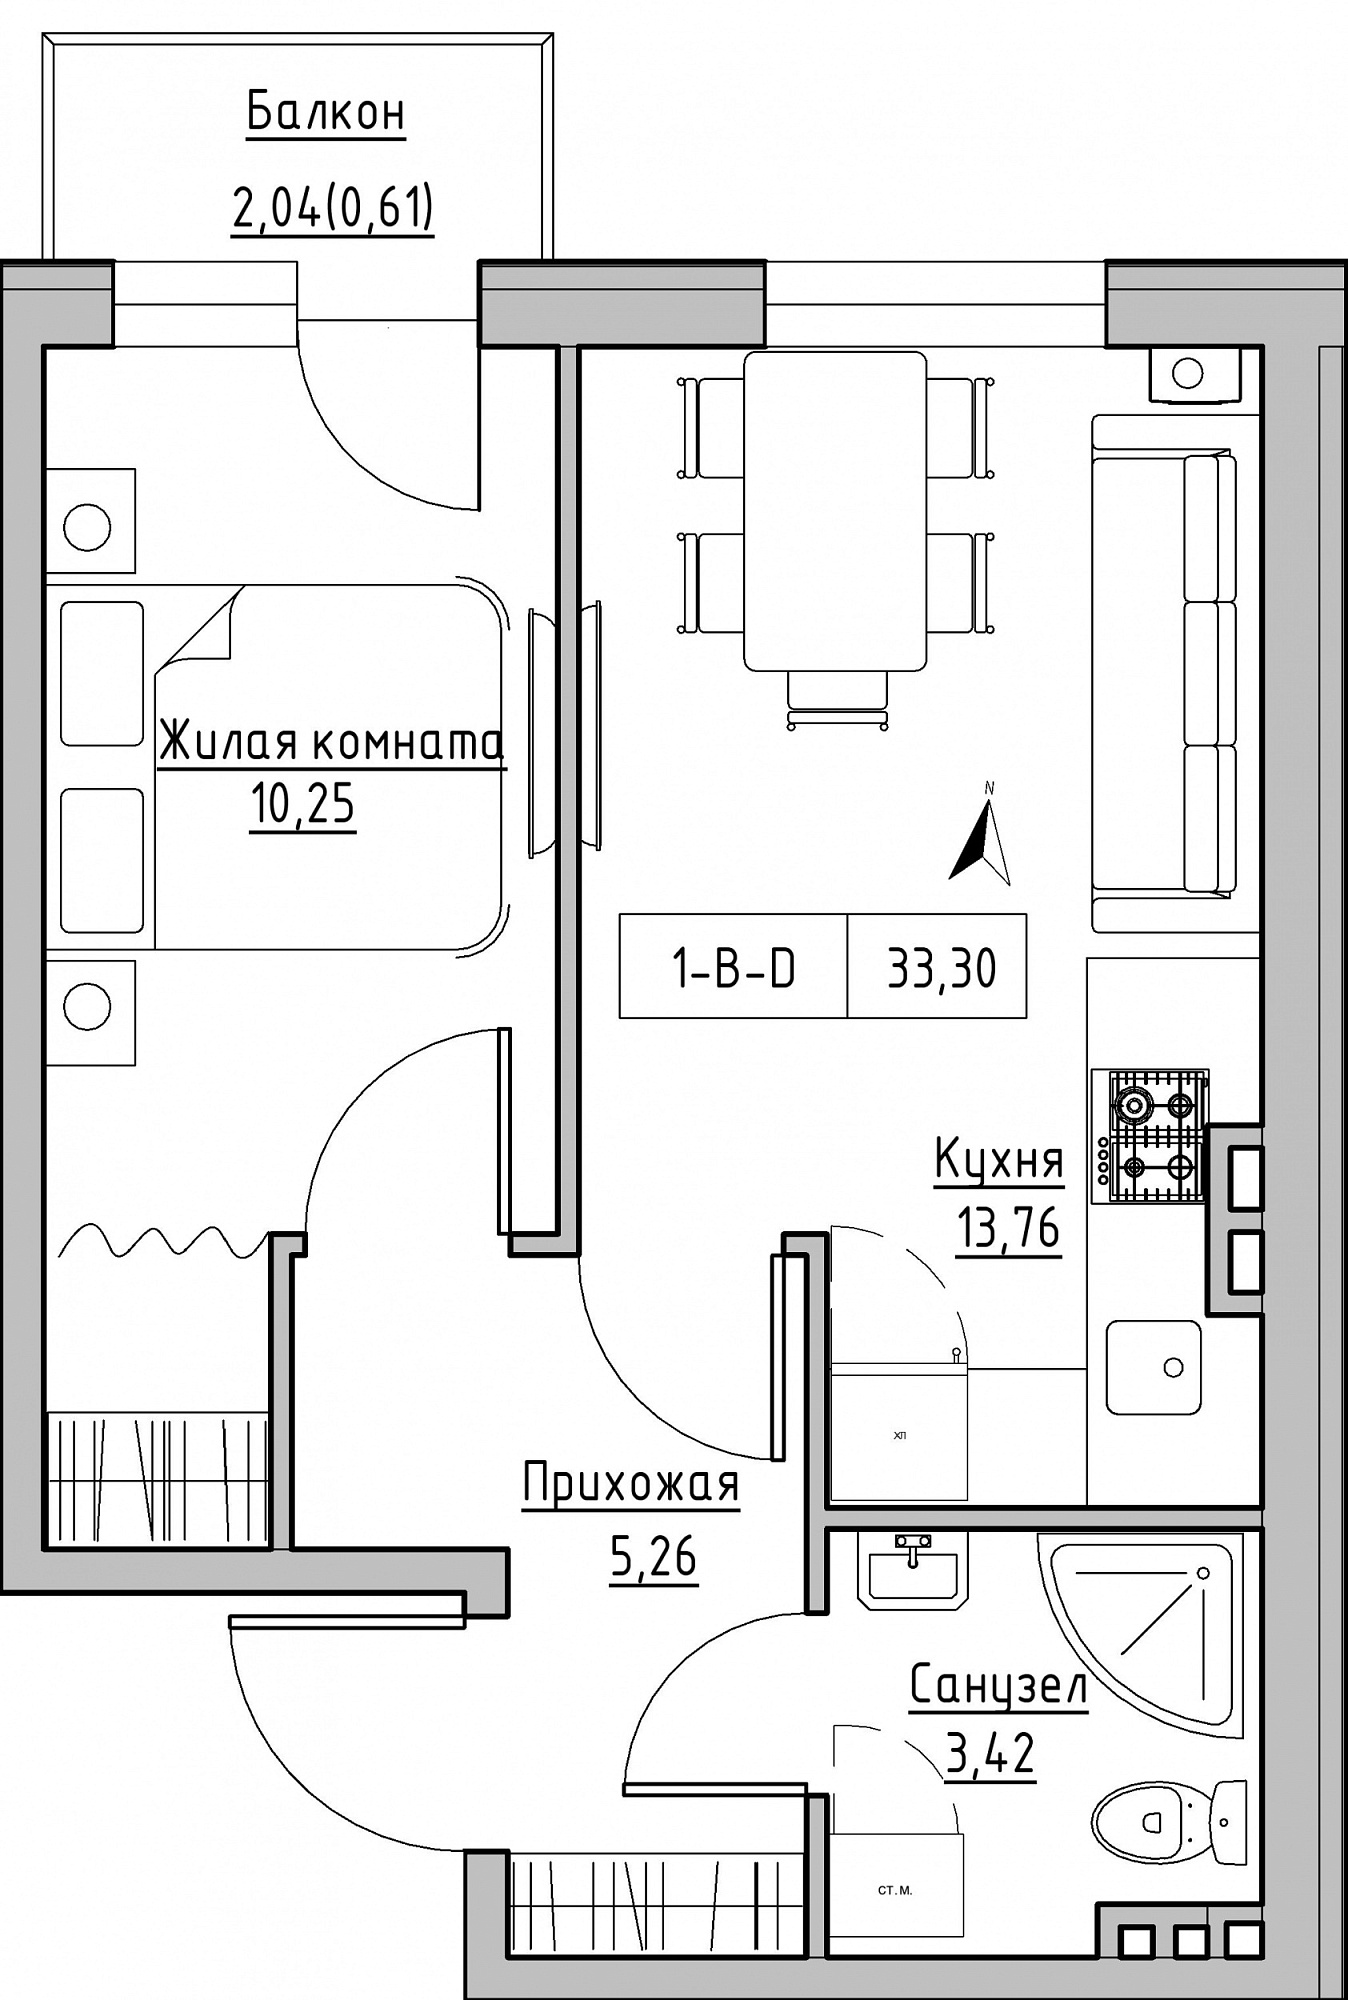 Planning 1-rm flats area 33.3m2, KS-024-04/0003.